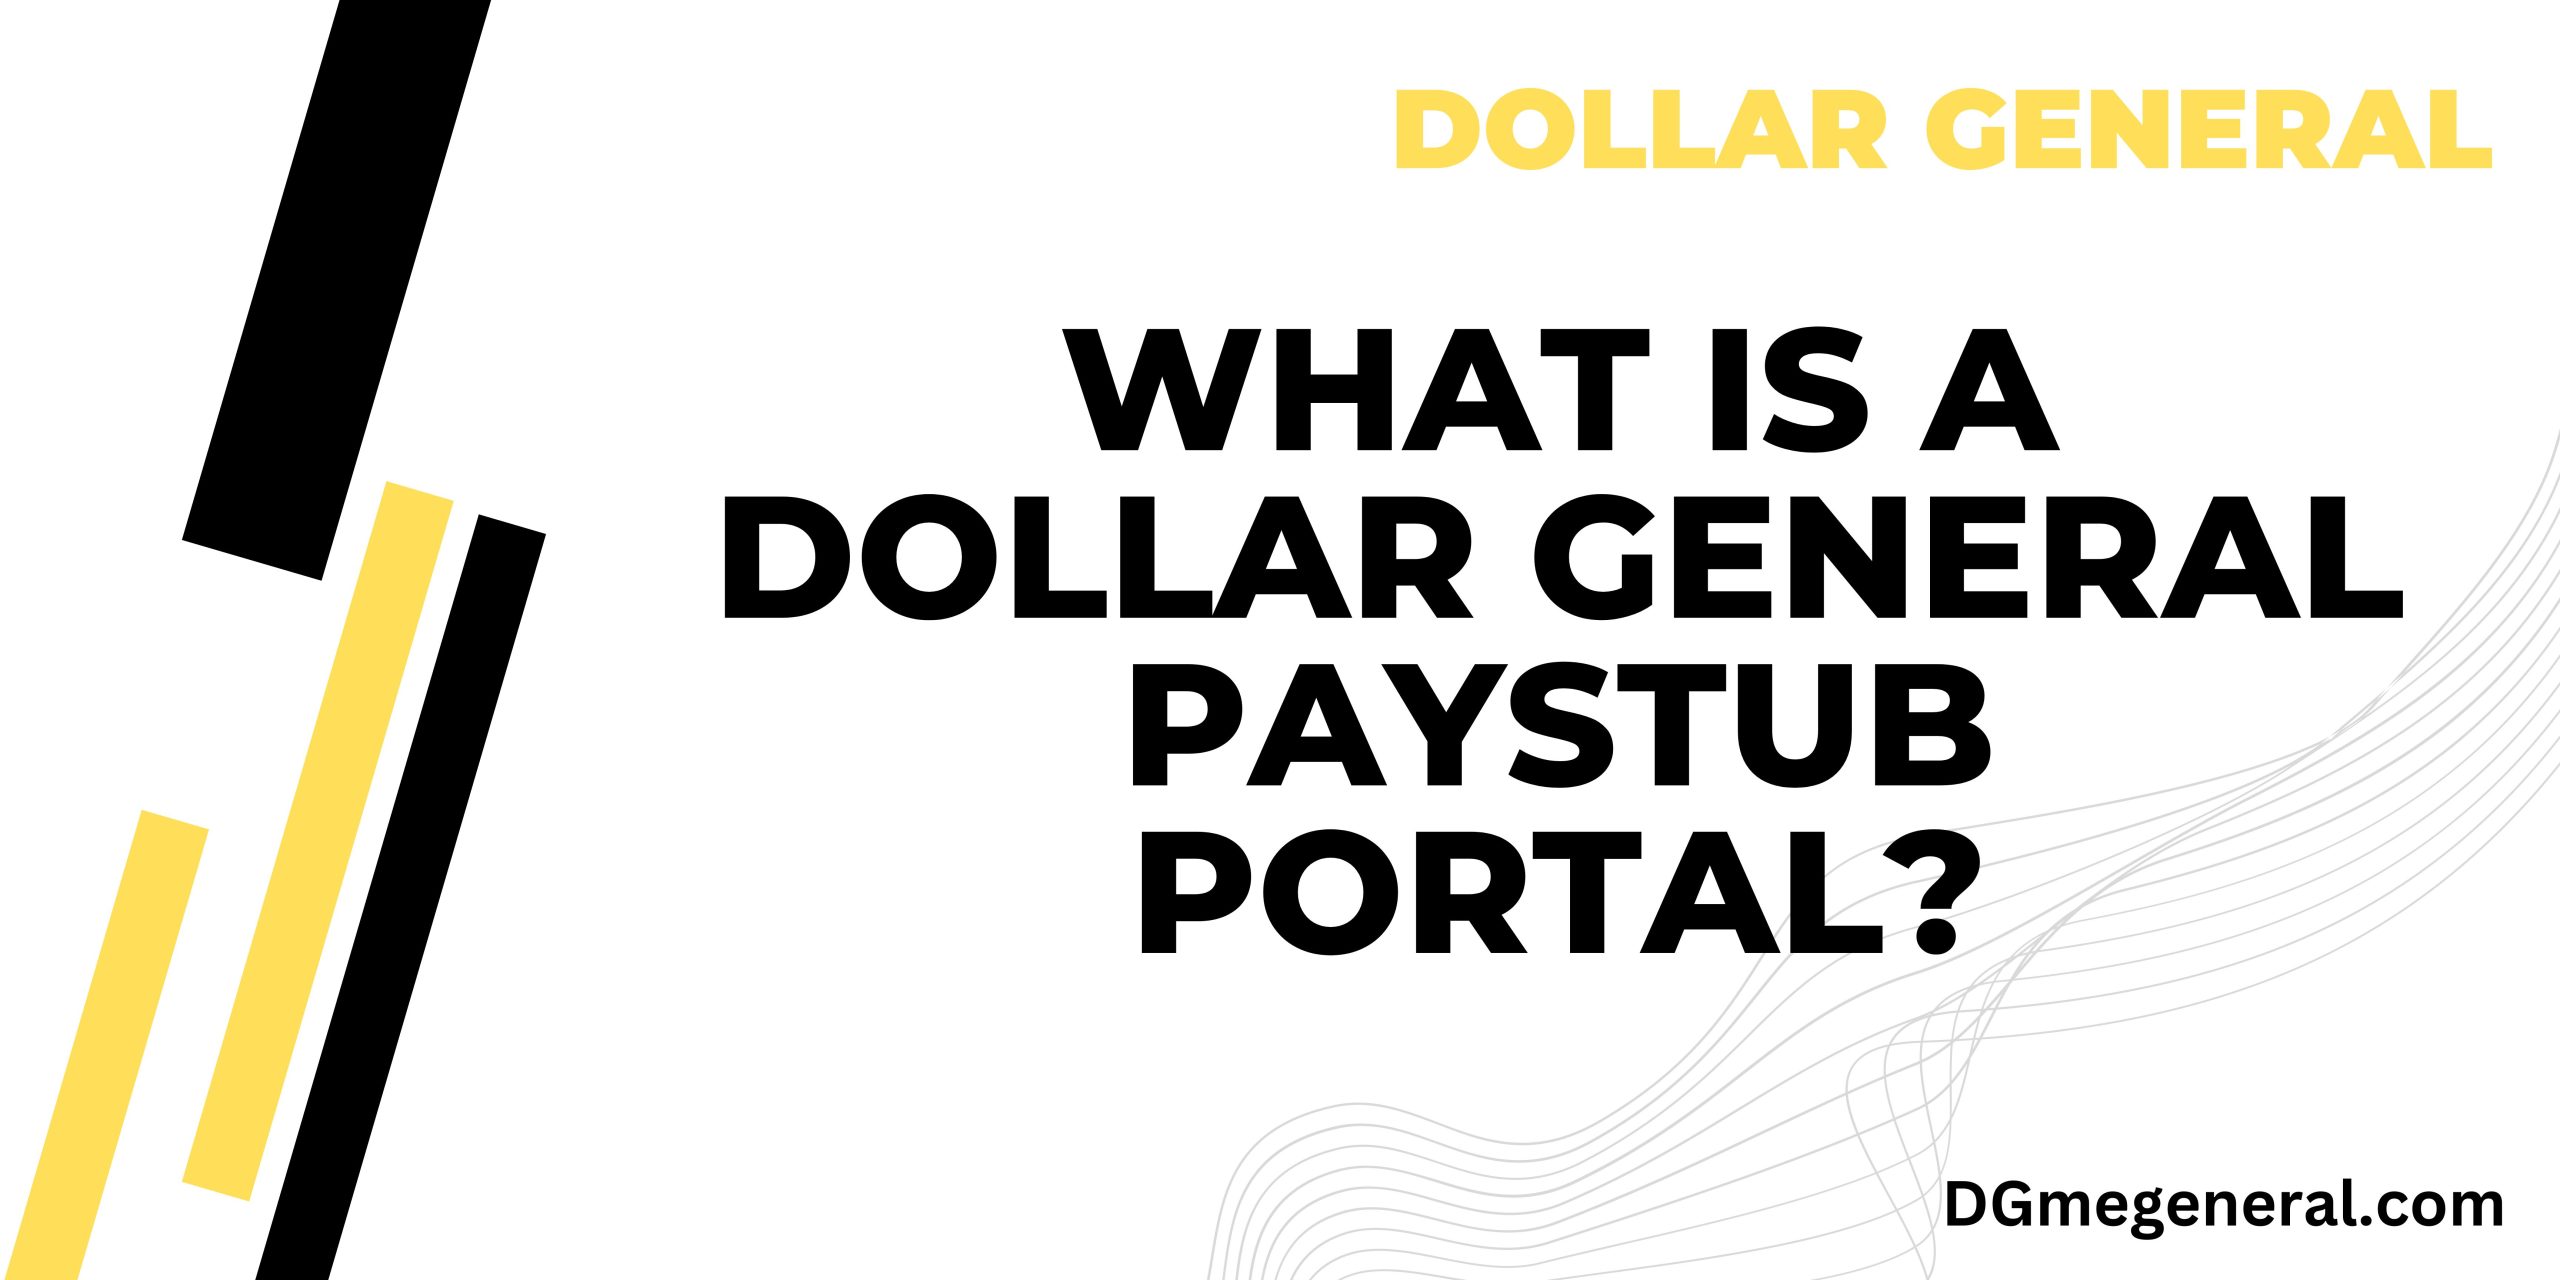 What is a dollar general paystub portal